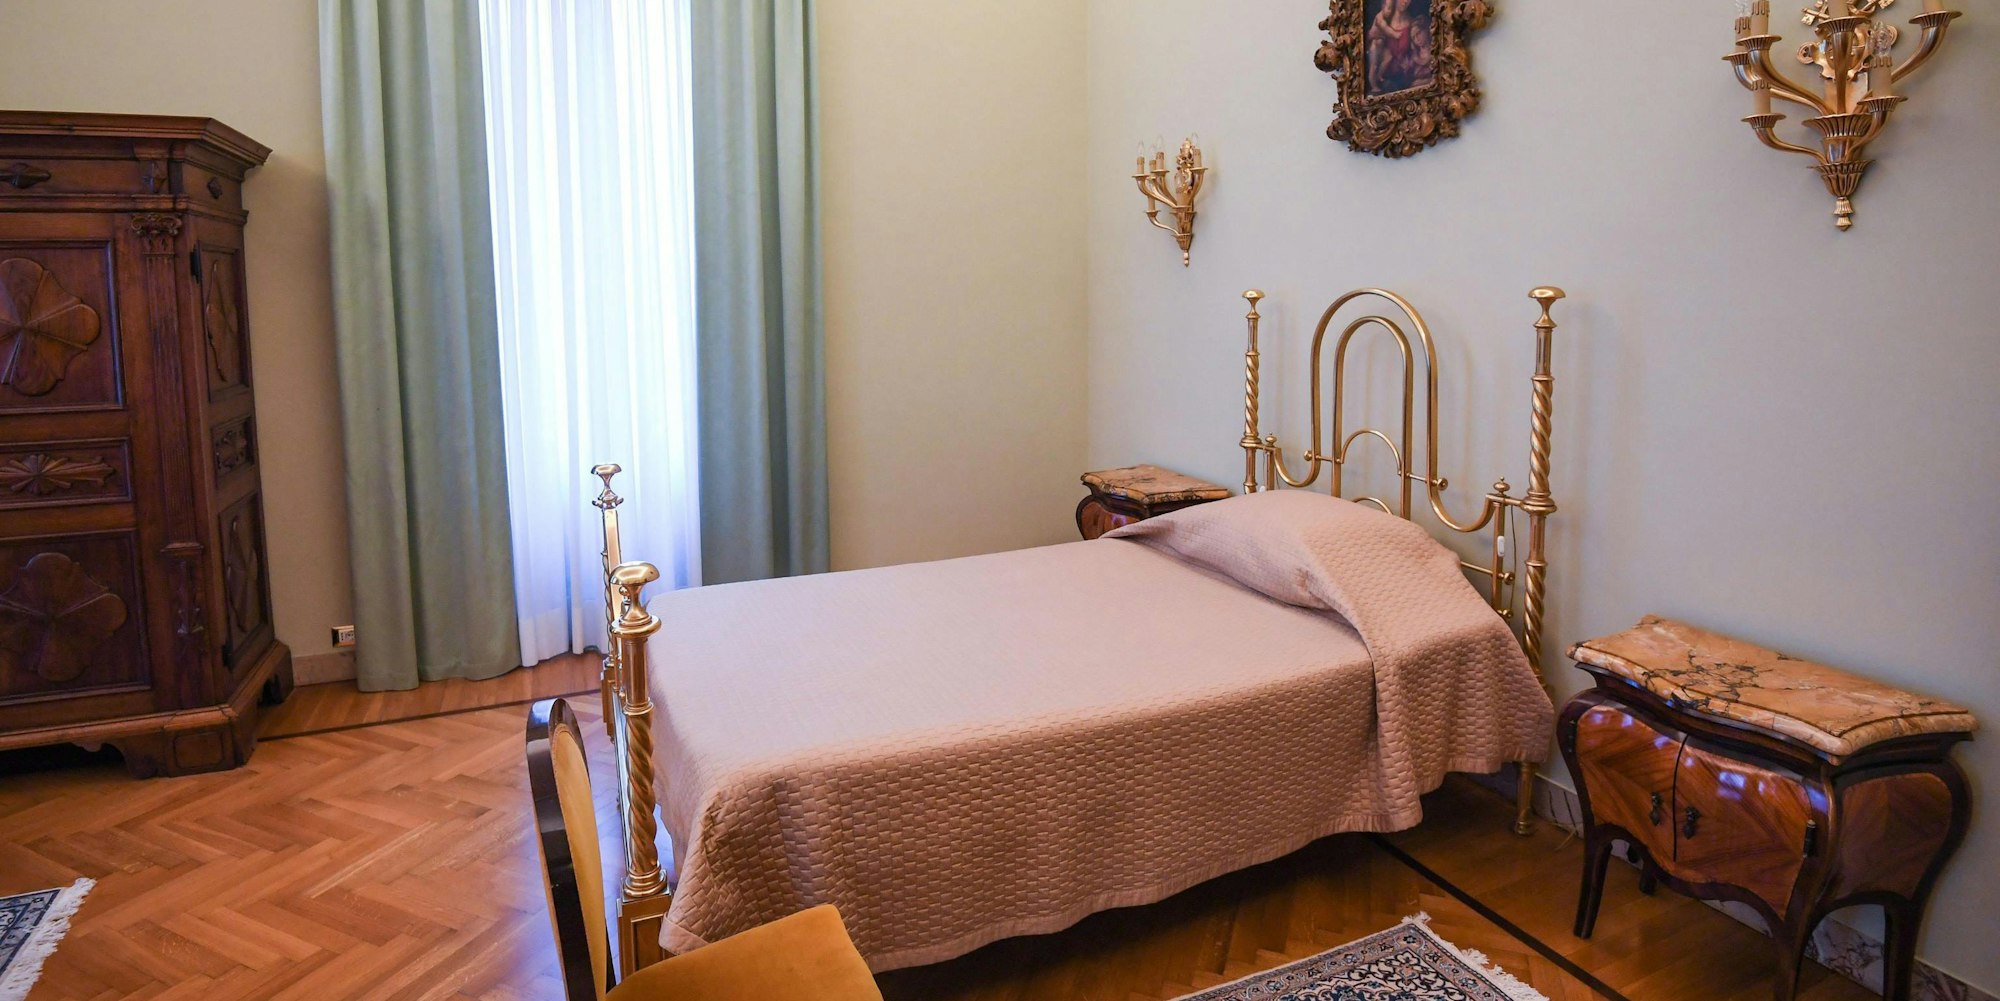 Papst-Bett in Castel Gandolfo